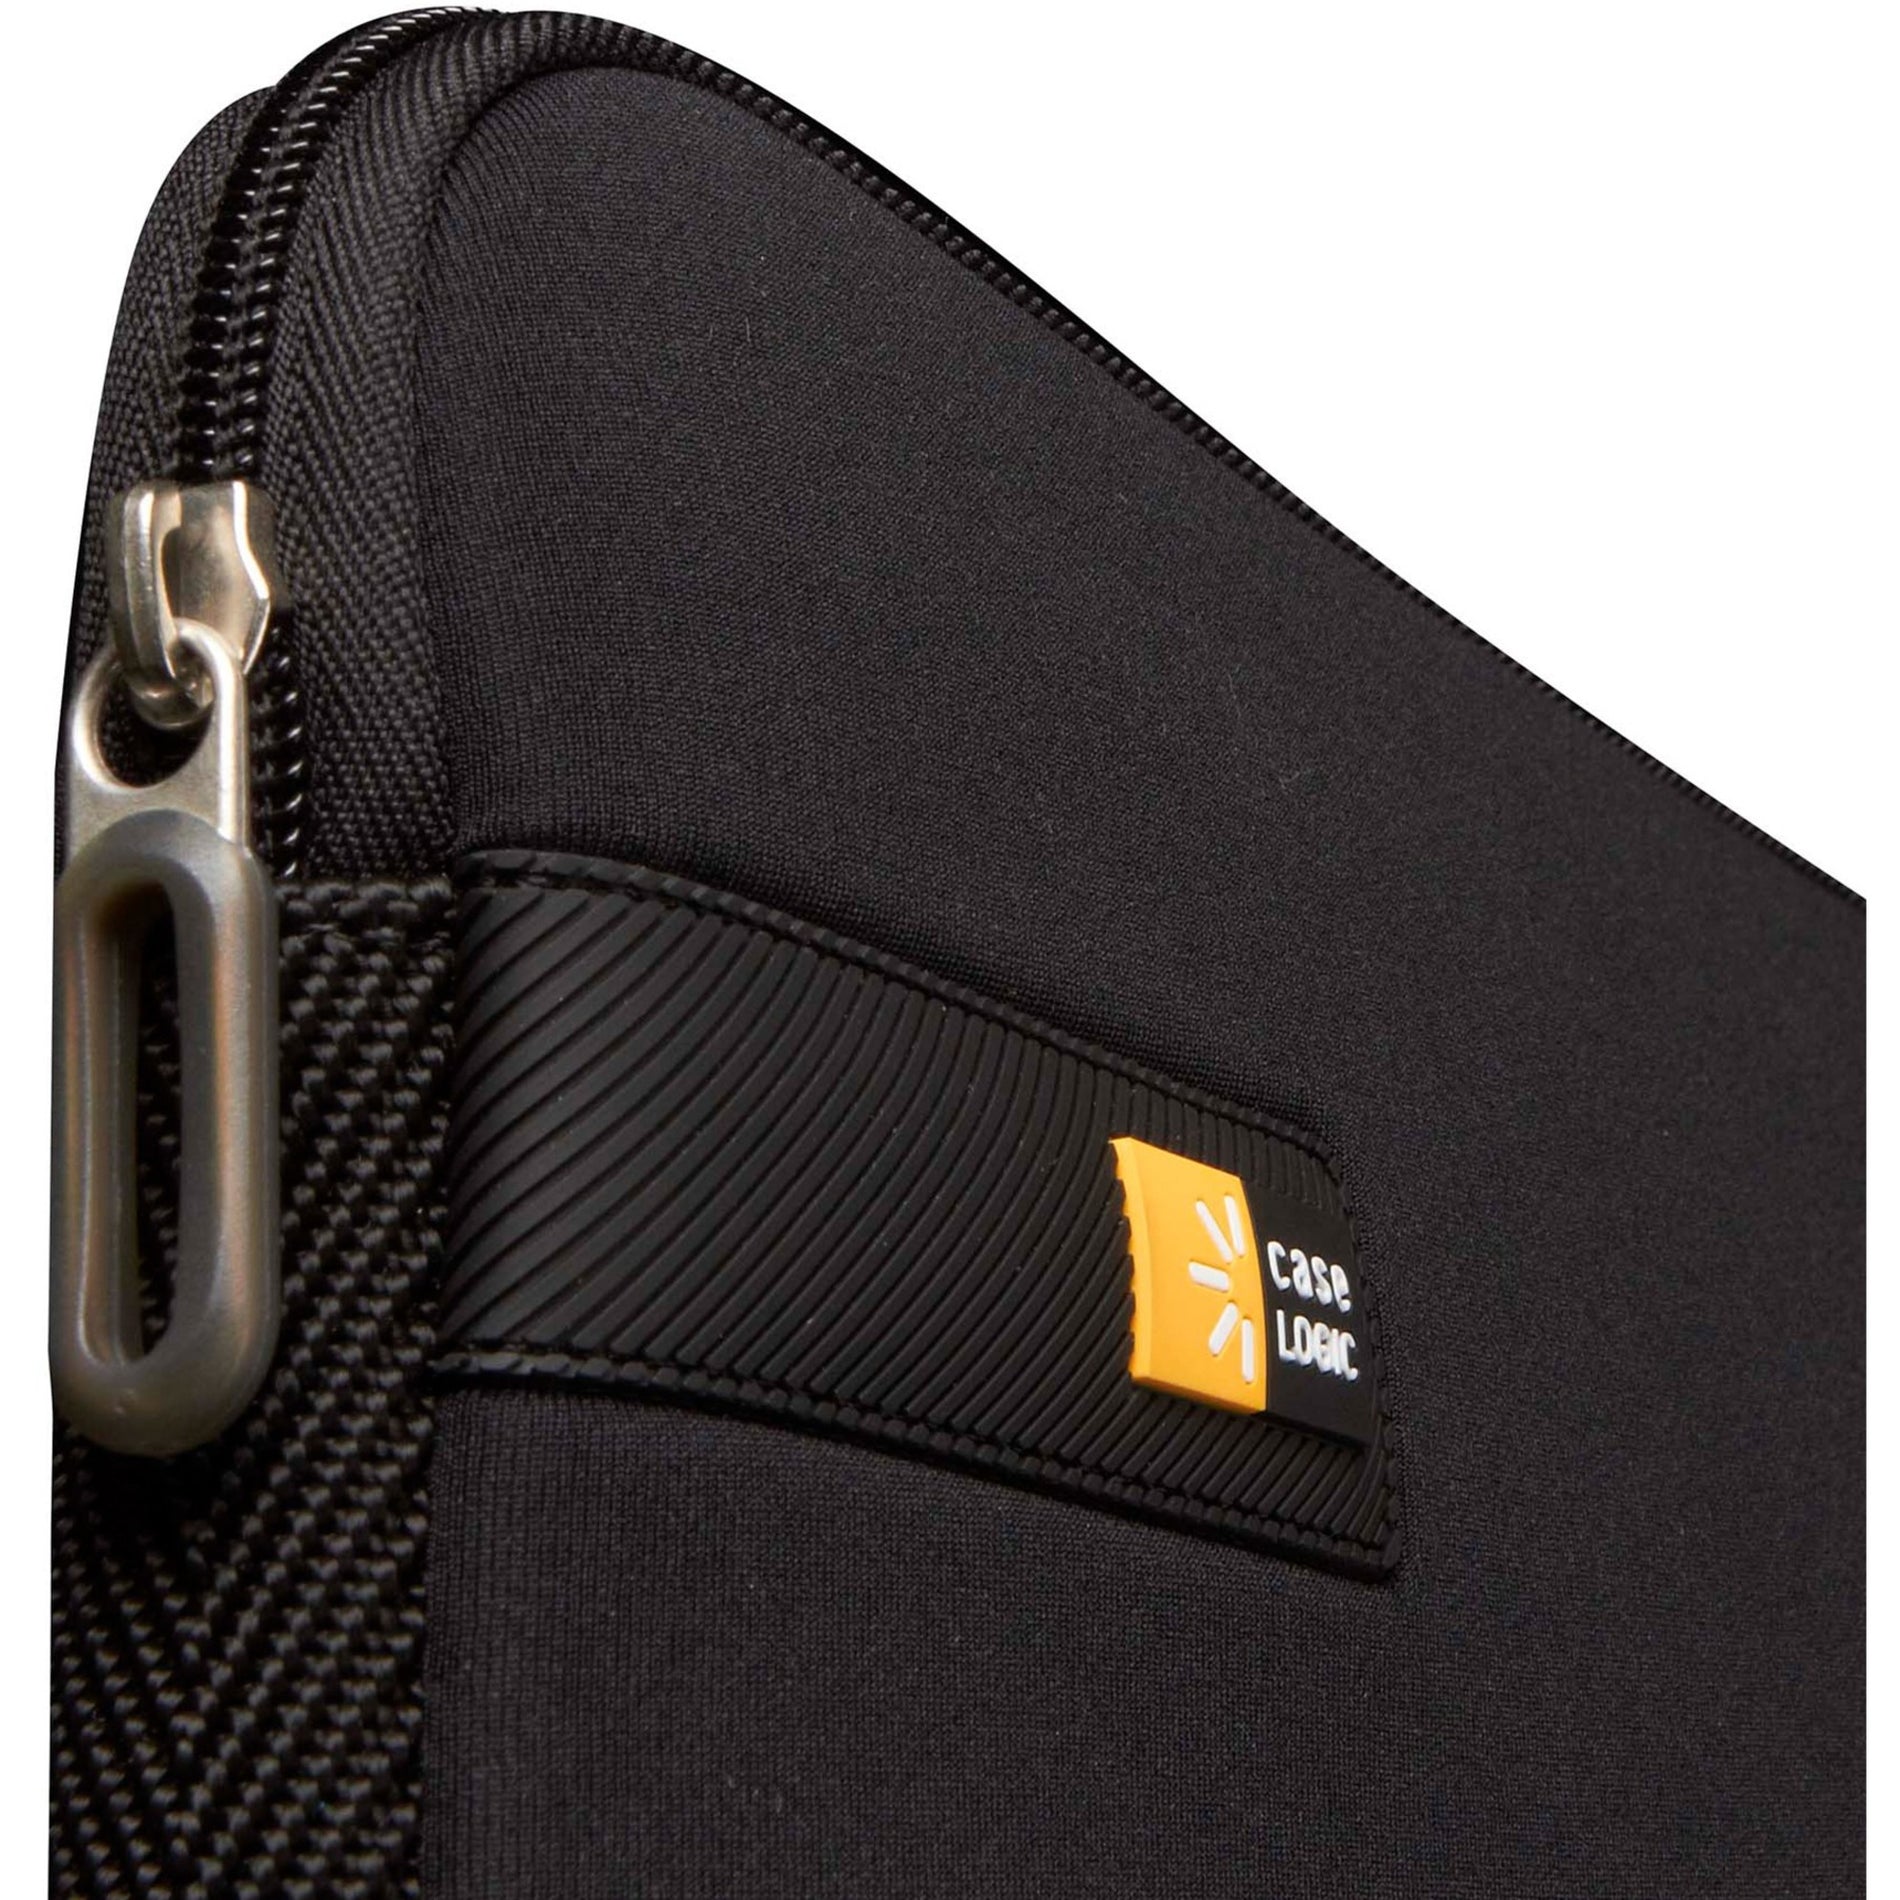 Case Logic 3201339 10-11.6" Chromebooks™/Ultrabooks™ Sleeve Tragetasche für Ultrabook Chromebook